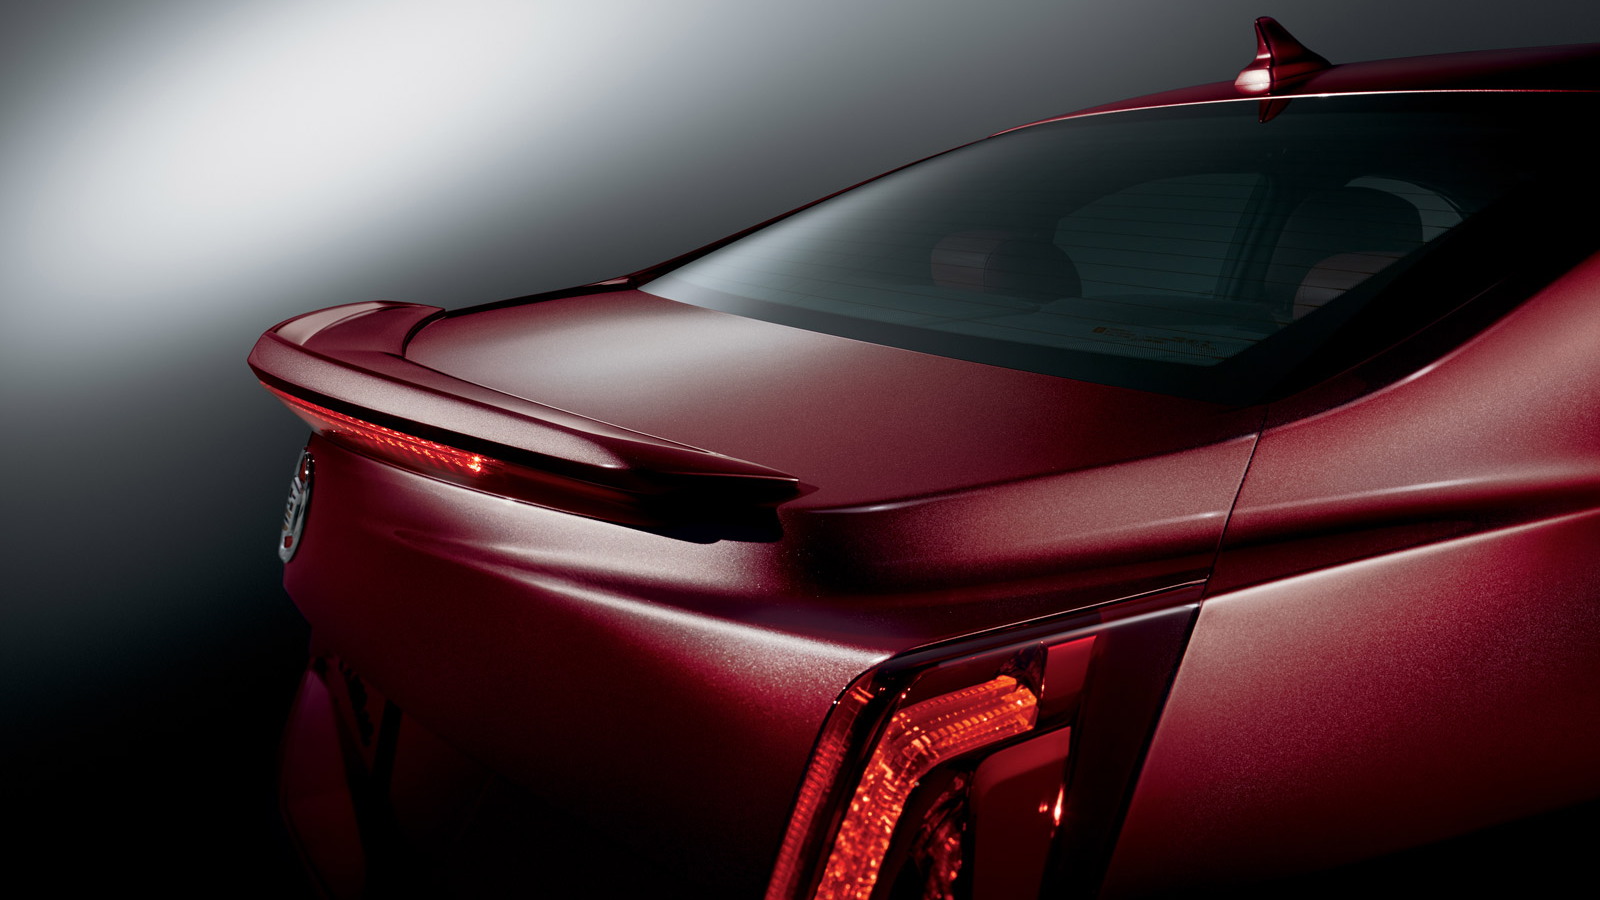 2014 Cadillac ATS Crimson Sport